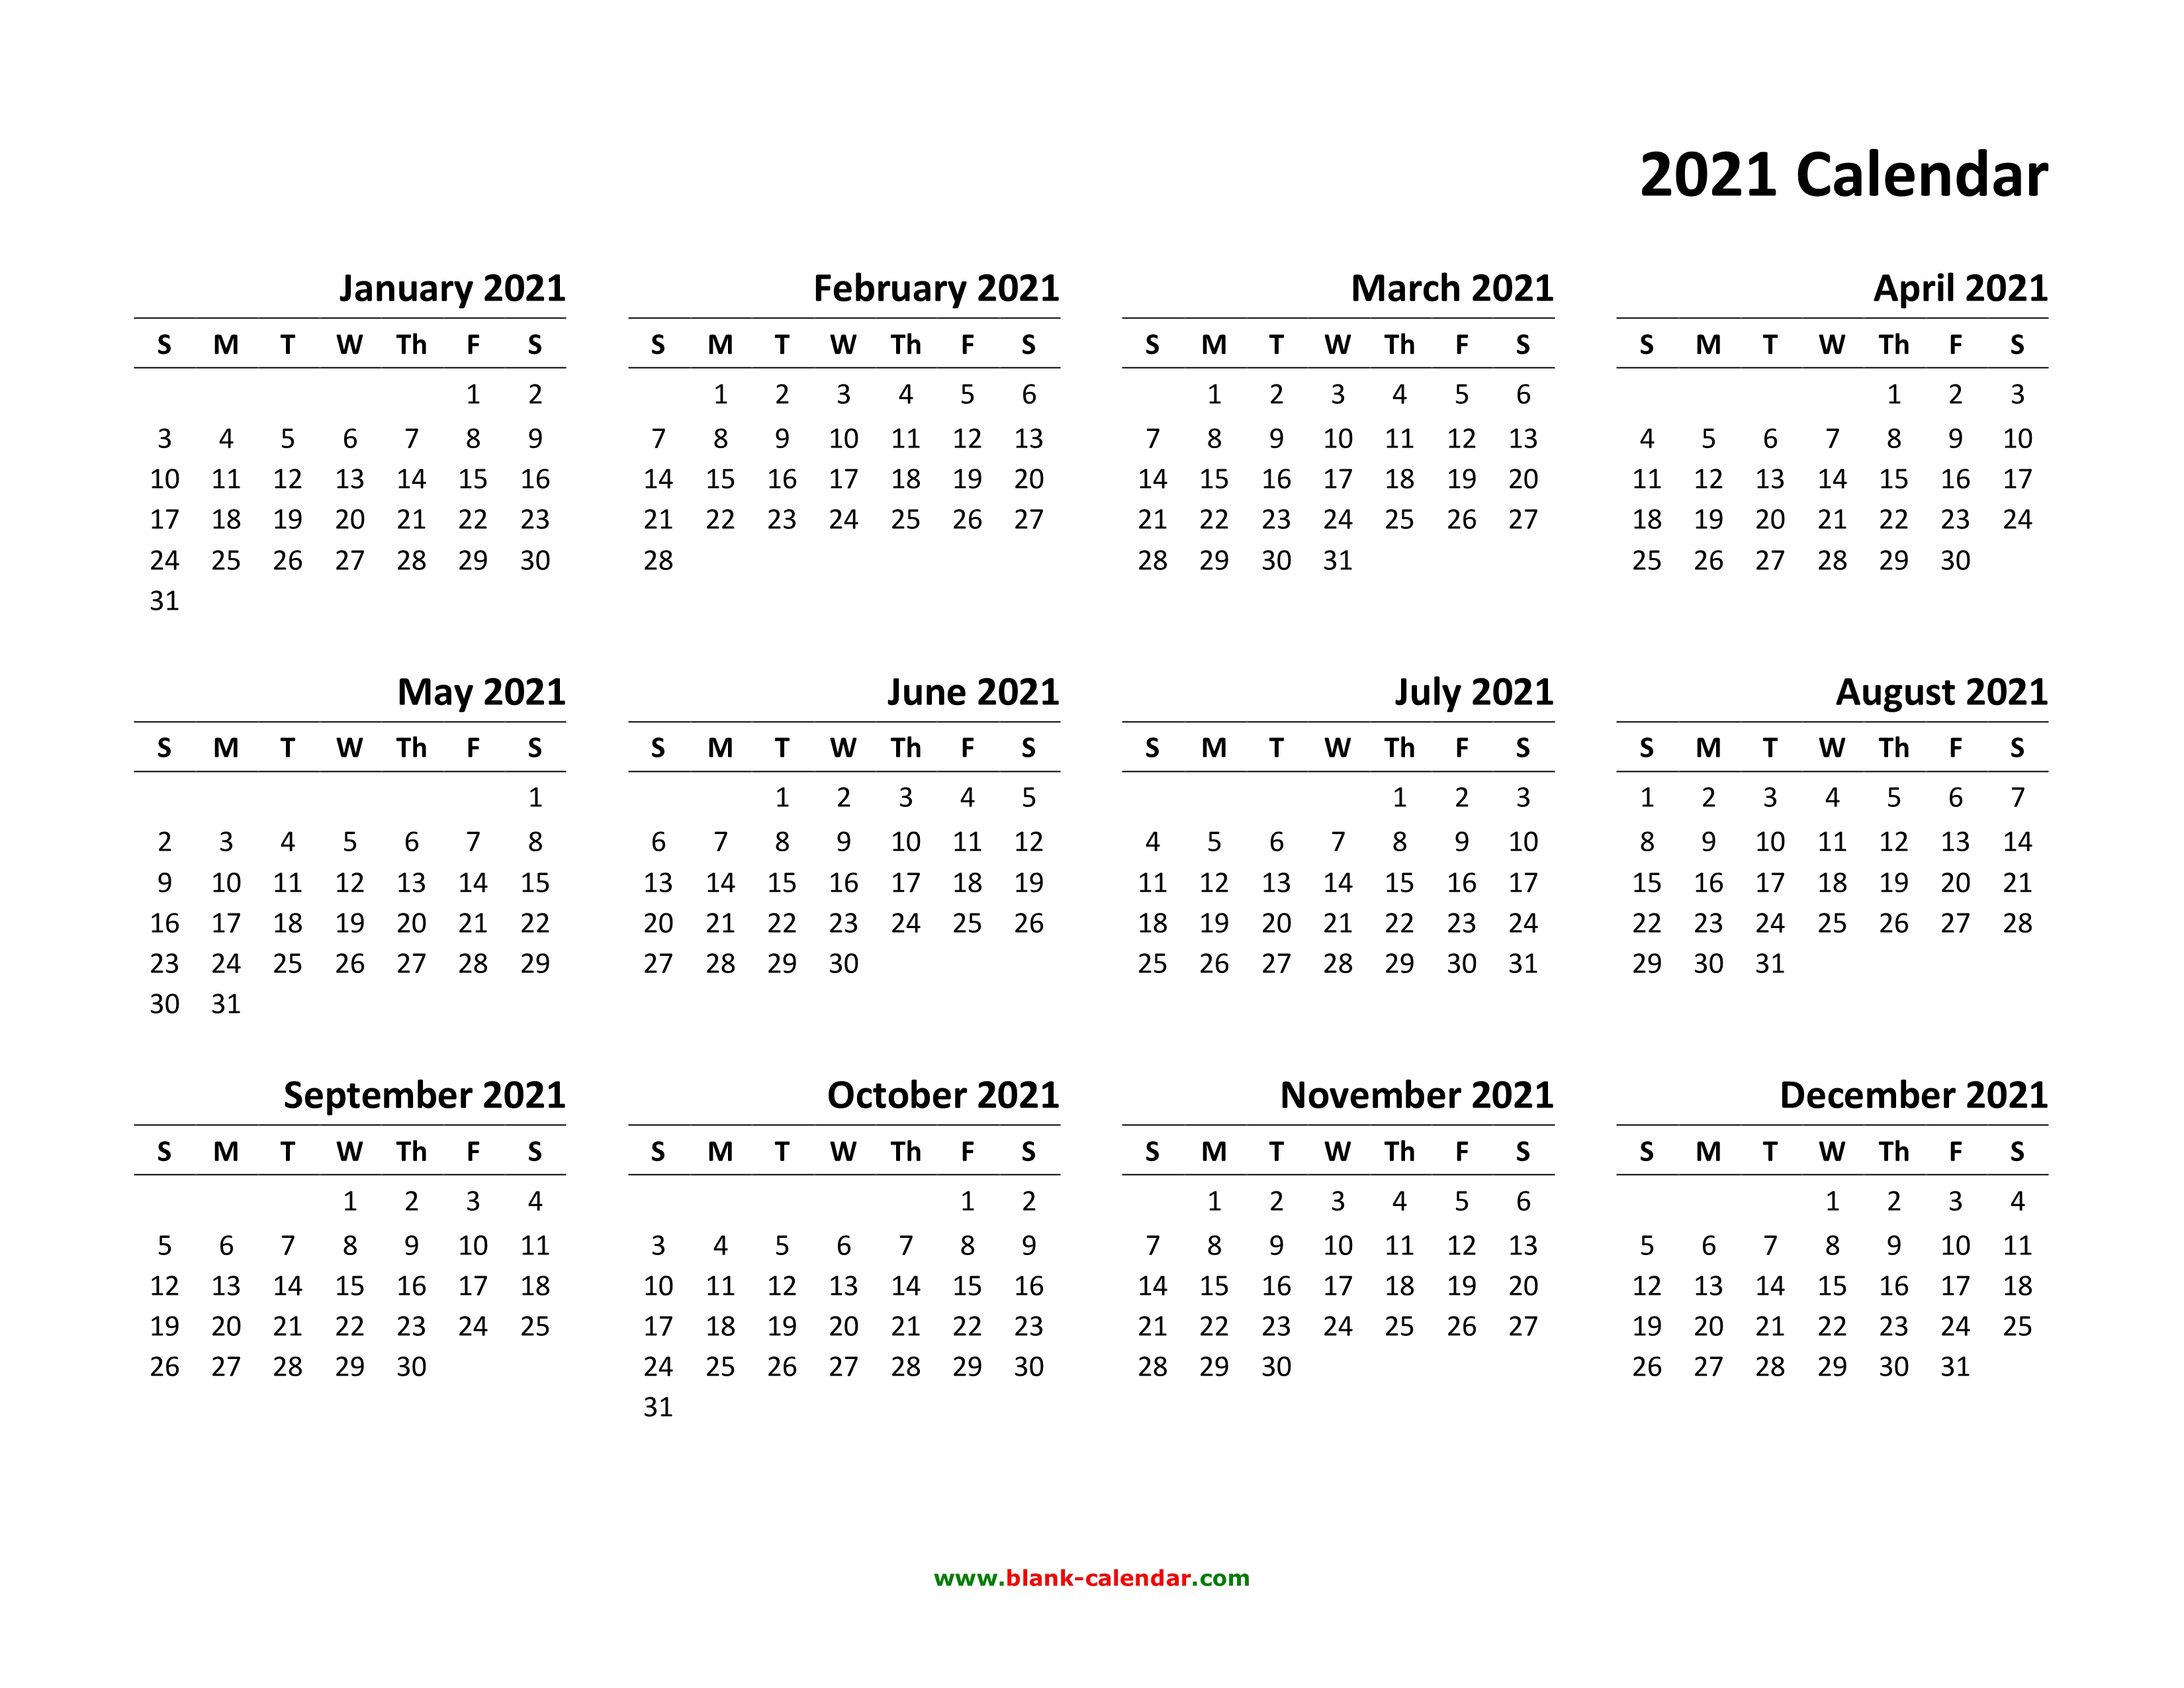 2021 calendar template word free download